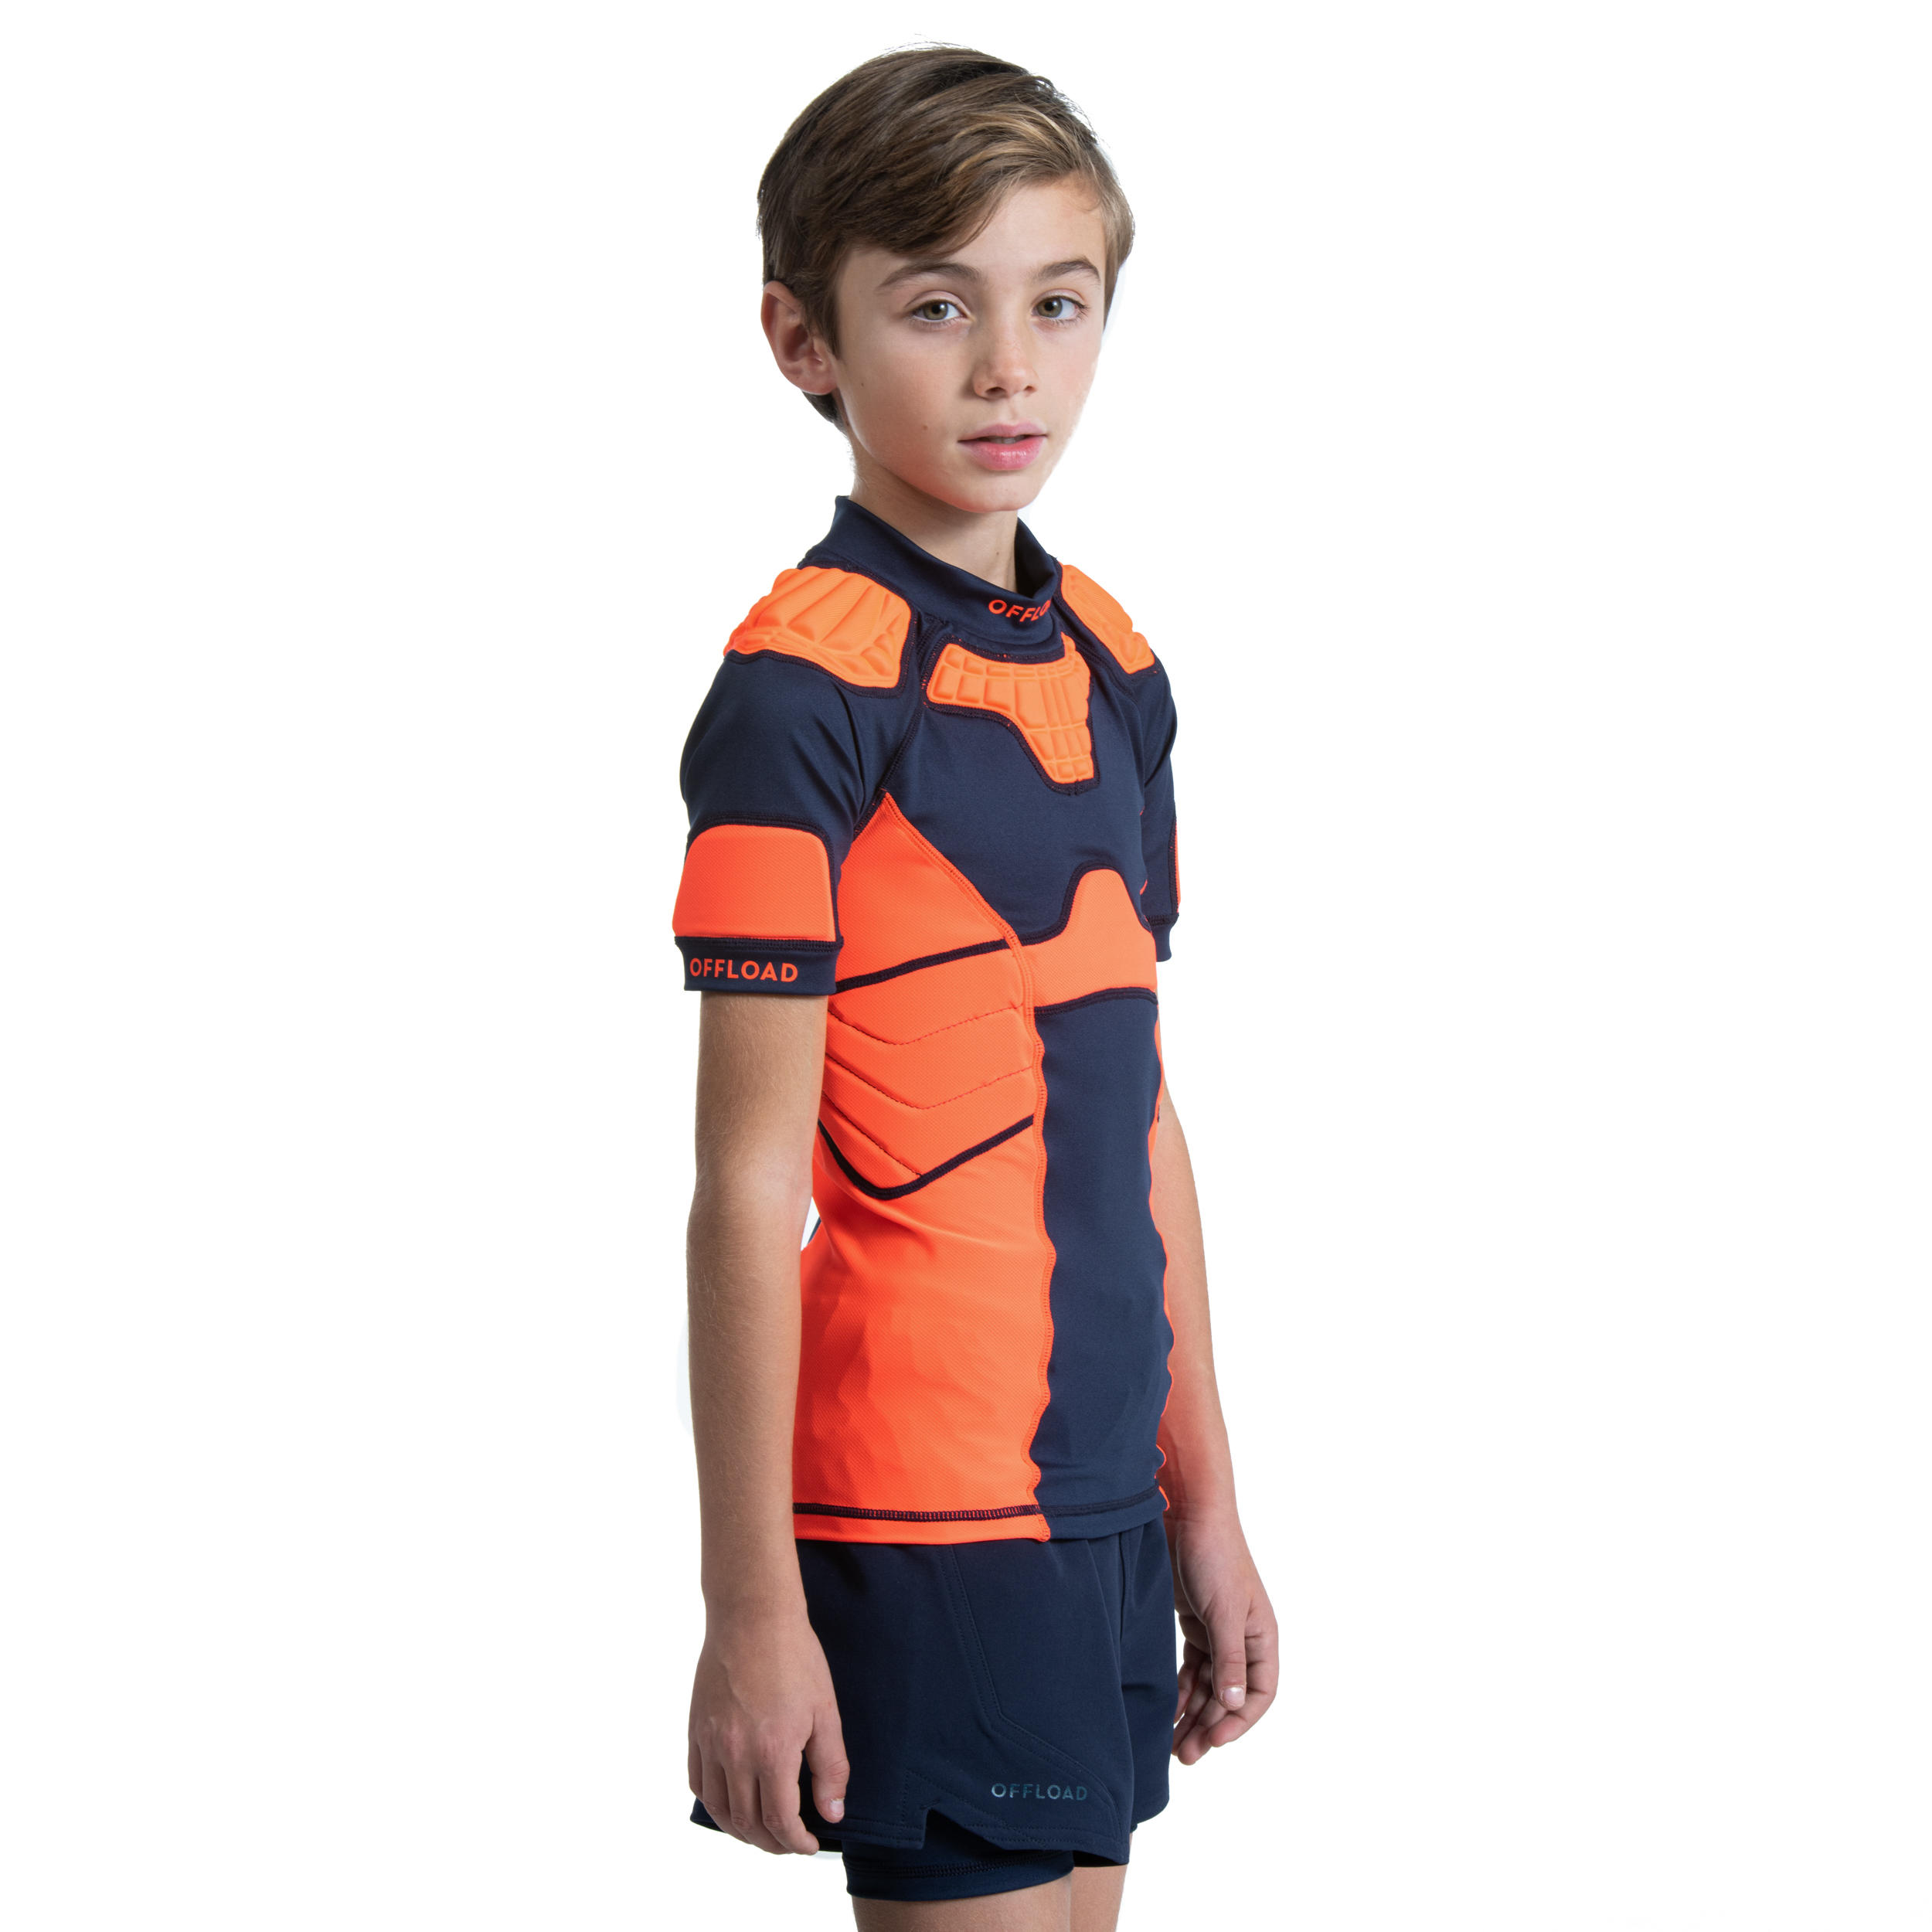 Kids' Rugby Shoulder Pad R500 - Orange 13/13